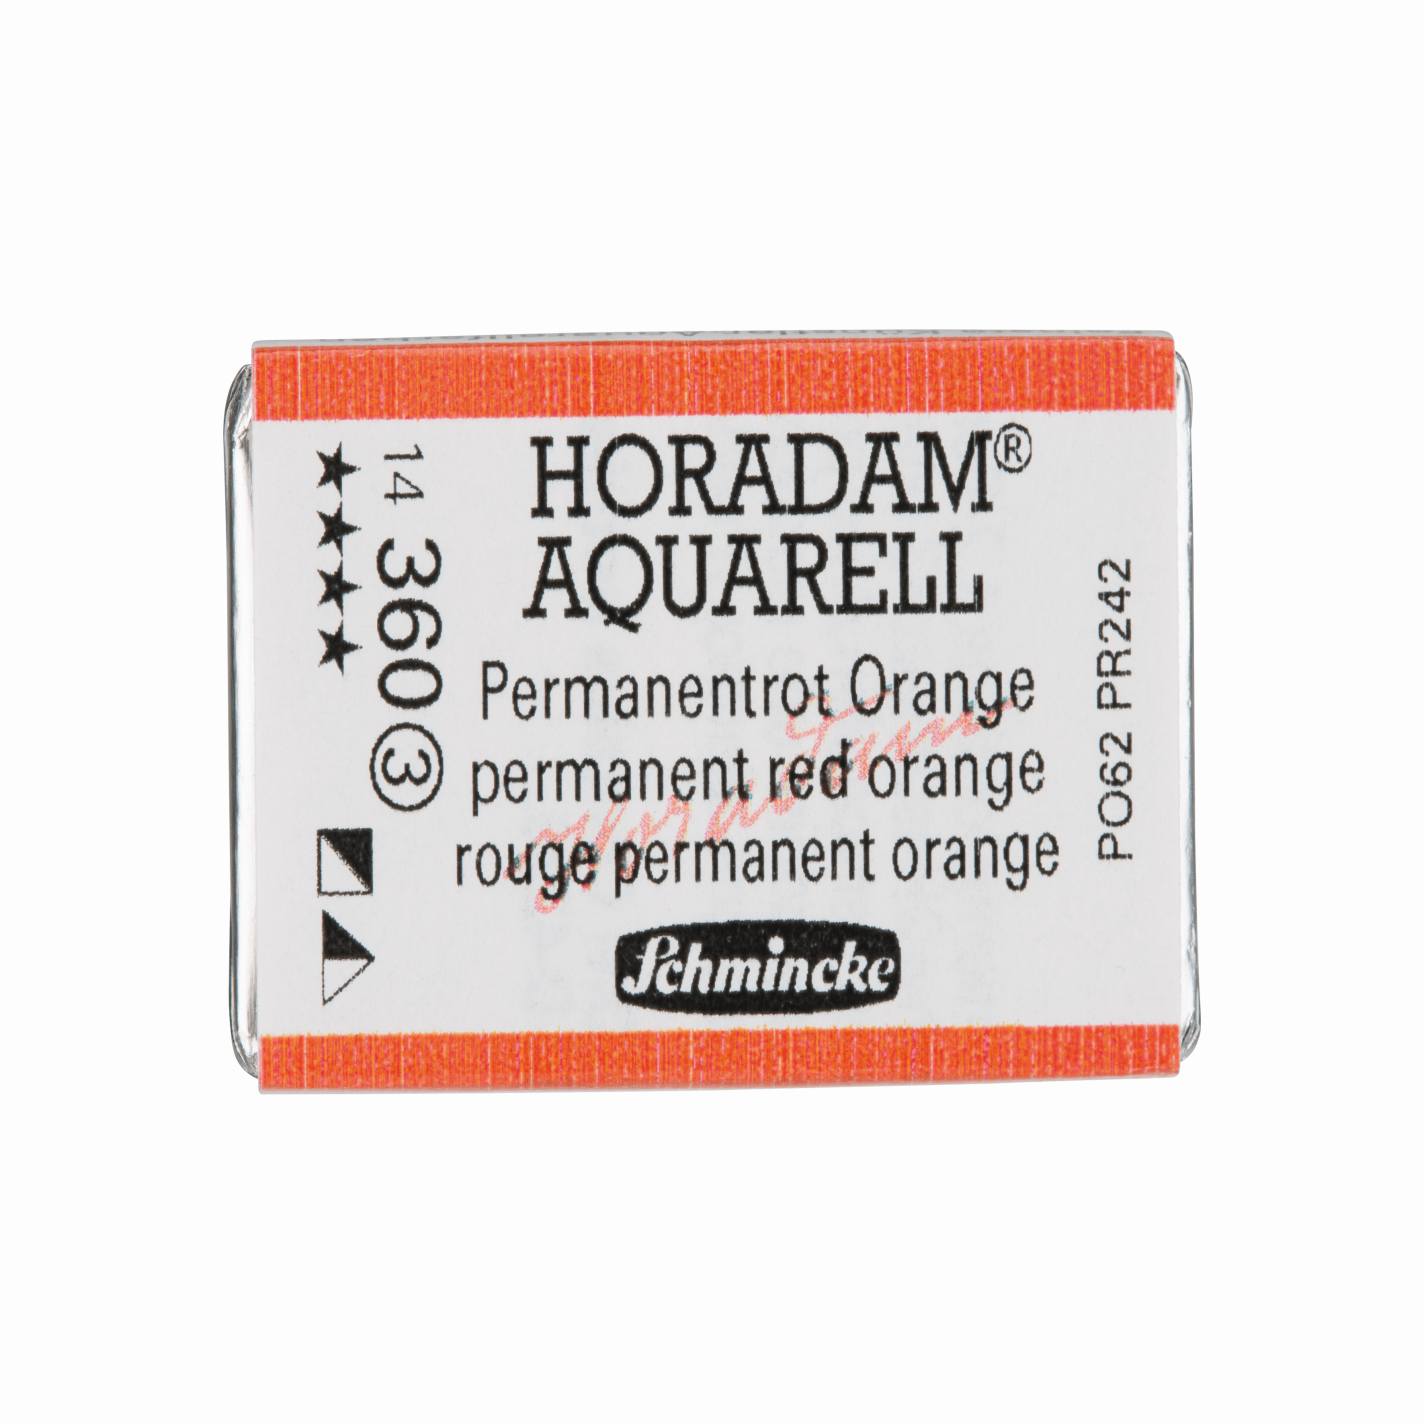 Schmincke Horadam Aquarell pans 1/1 pan Permanent Red Orange